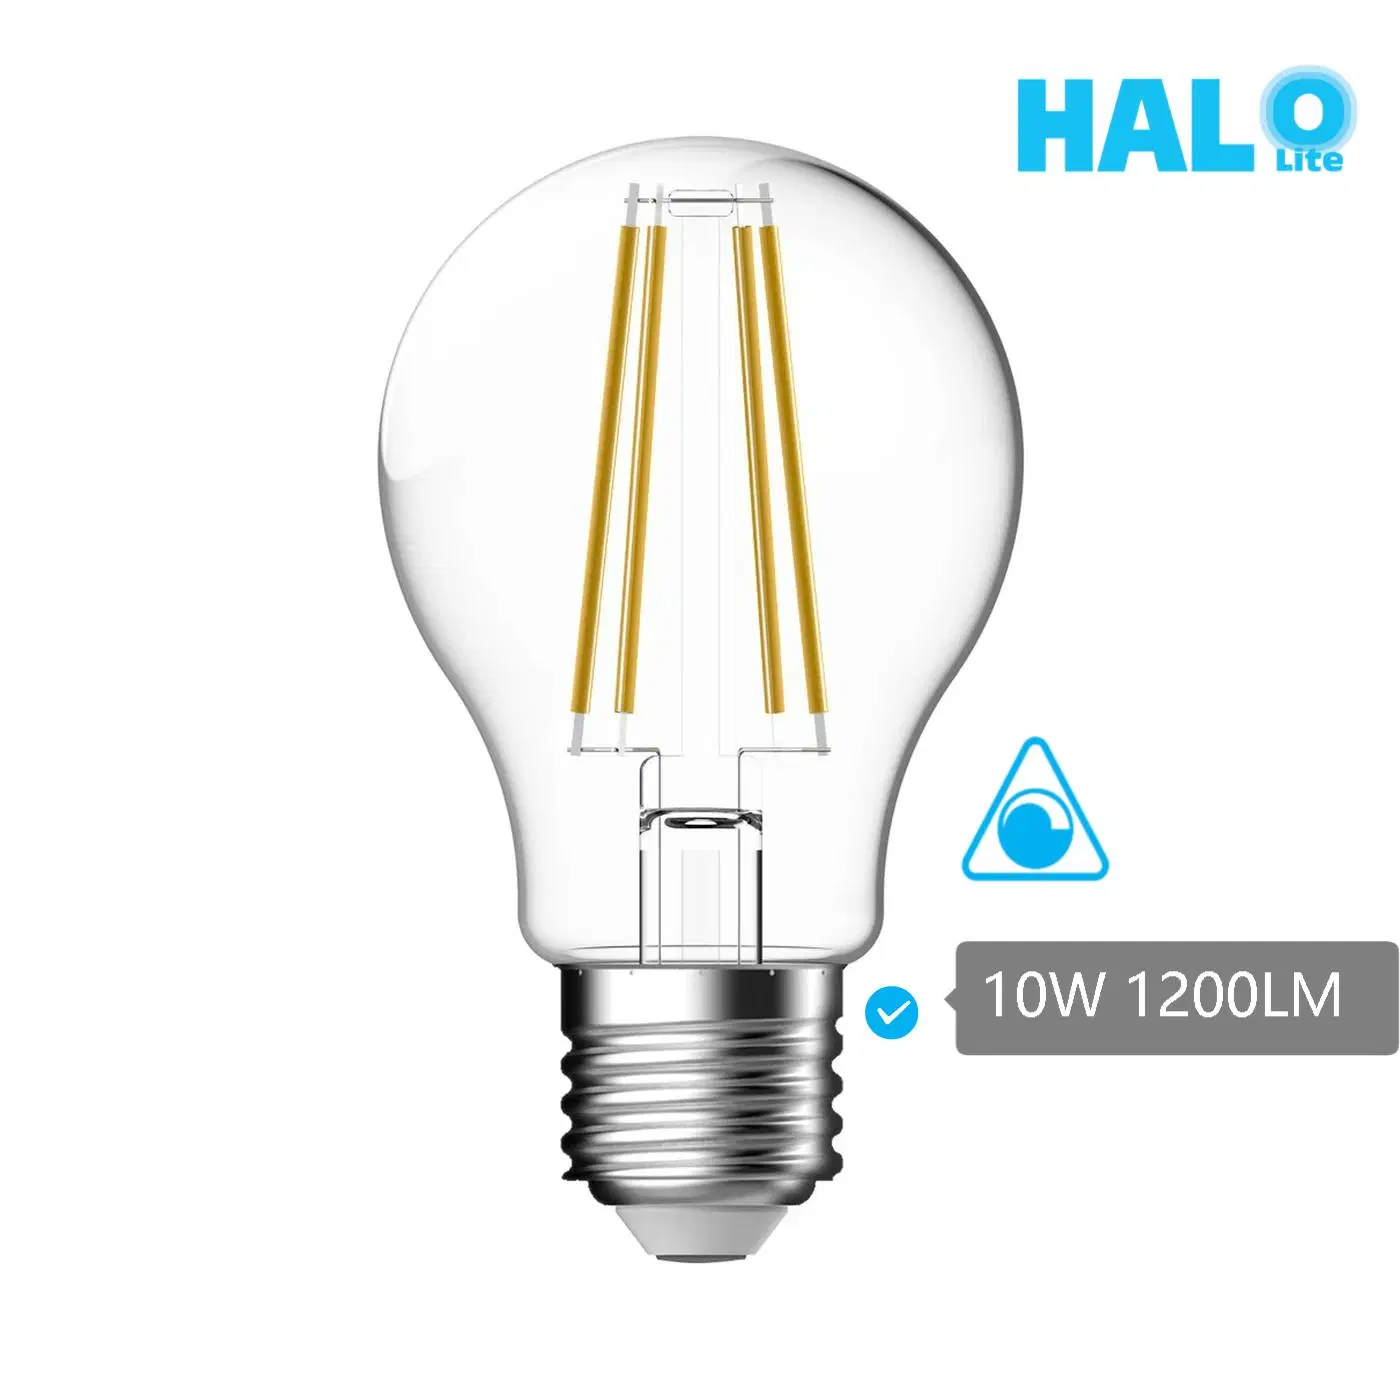 Halolite 10W E27 A60 Edison bombilla LED Lámpara de ahorro de energía regulación clara